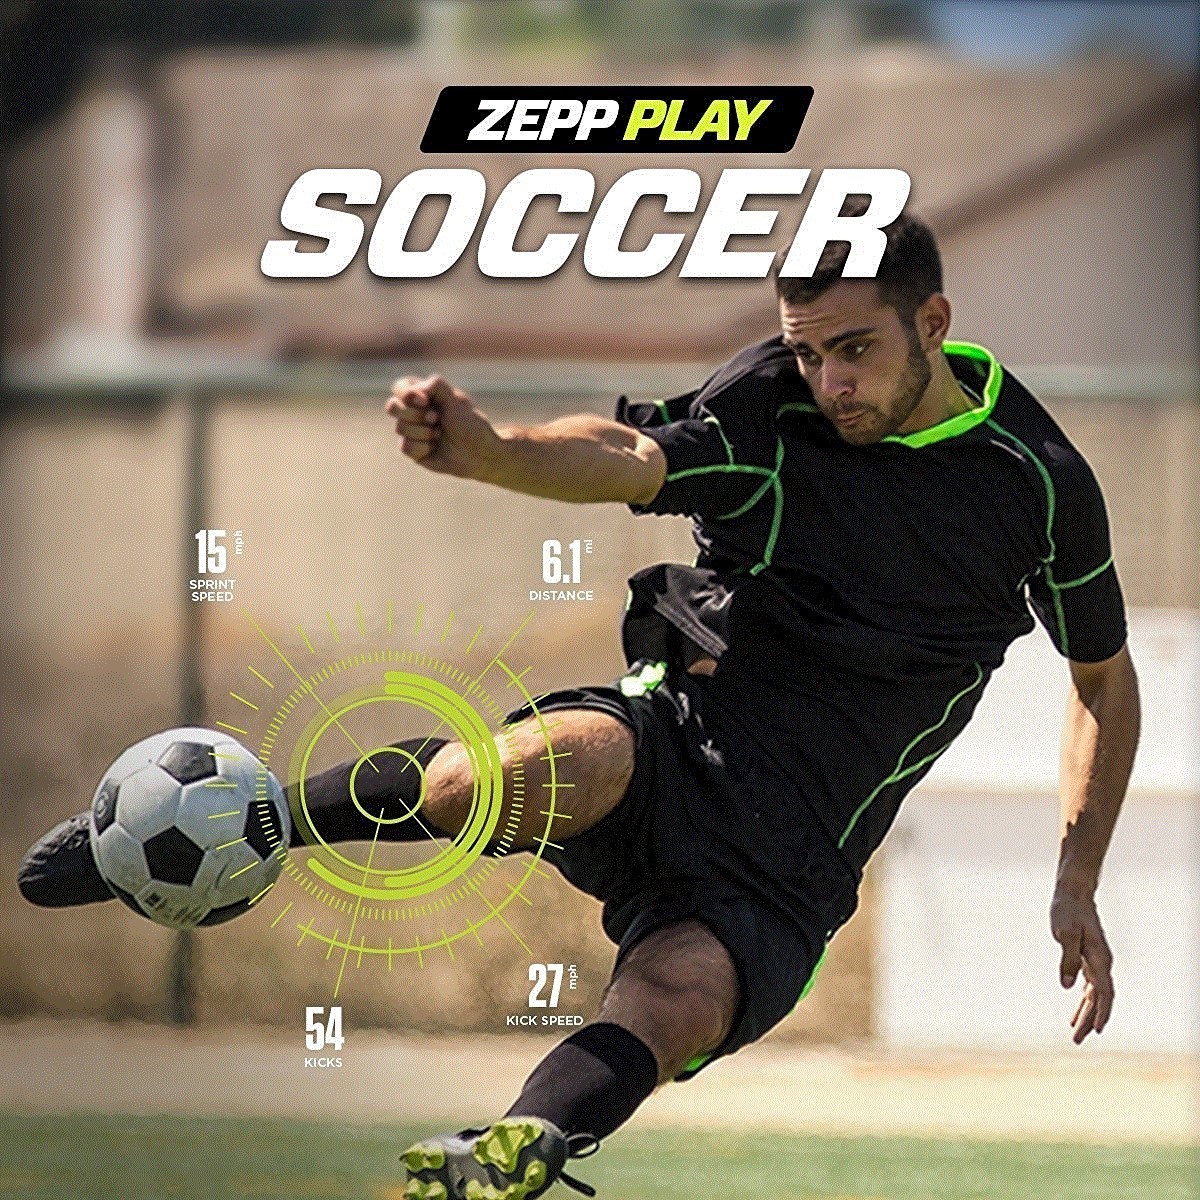 ZEPP play Soccer智能足球传感器数据记录动作分析仪数据评估.